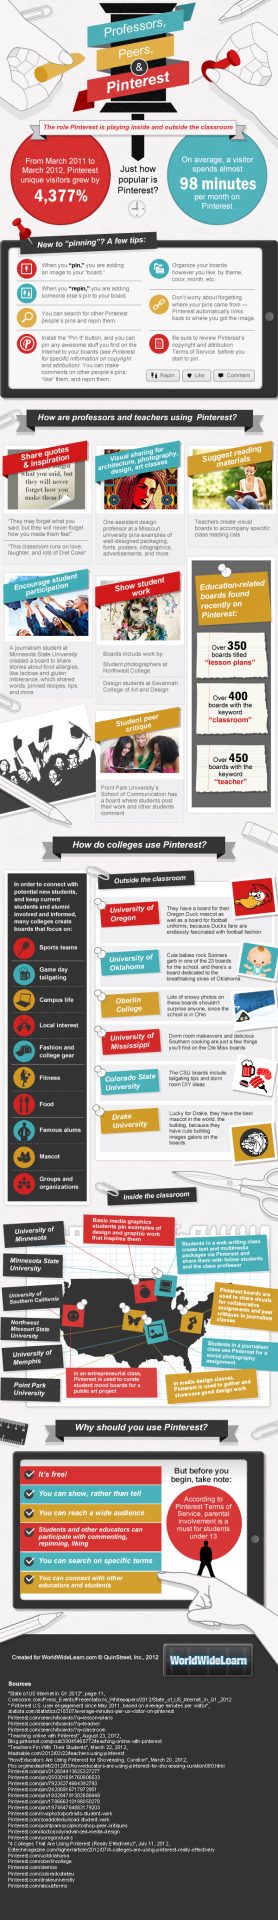 Educators Guide To Pinterest